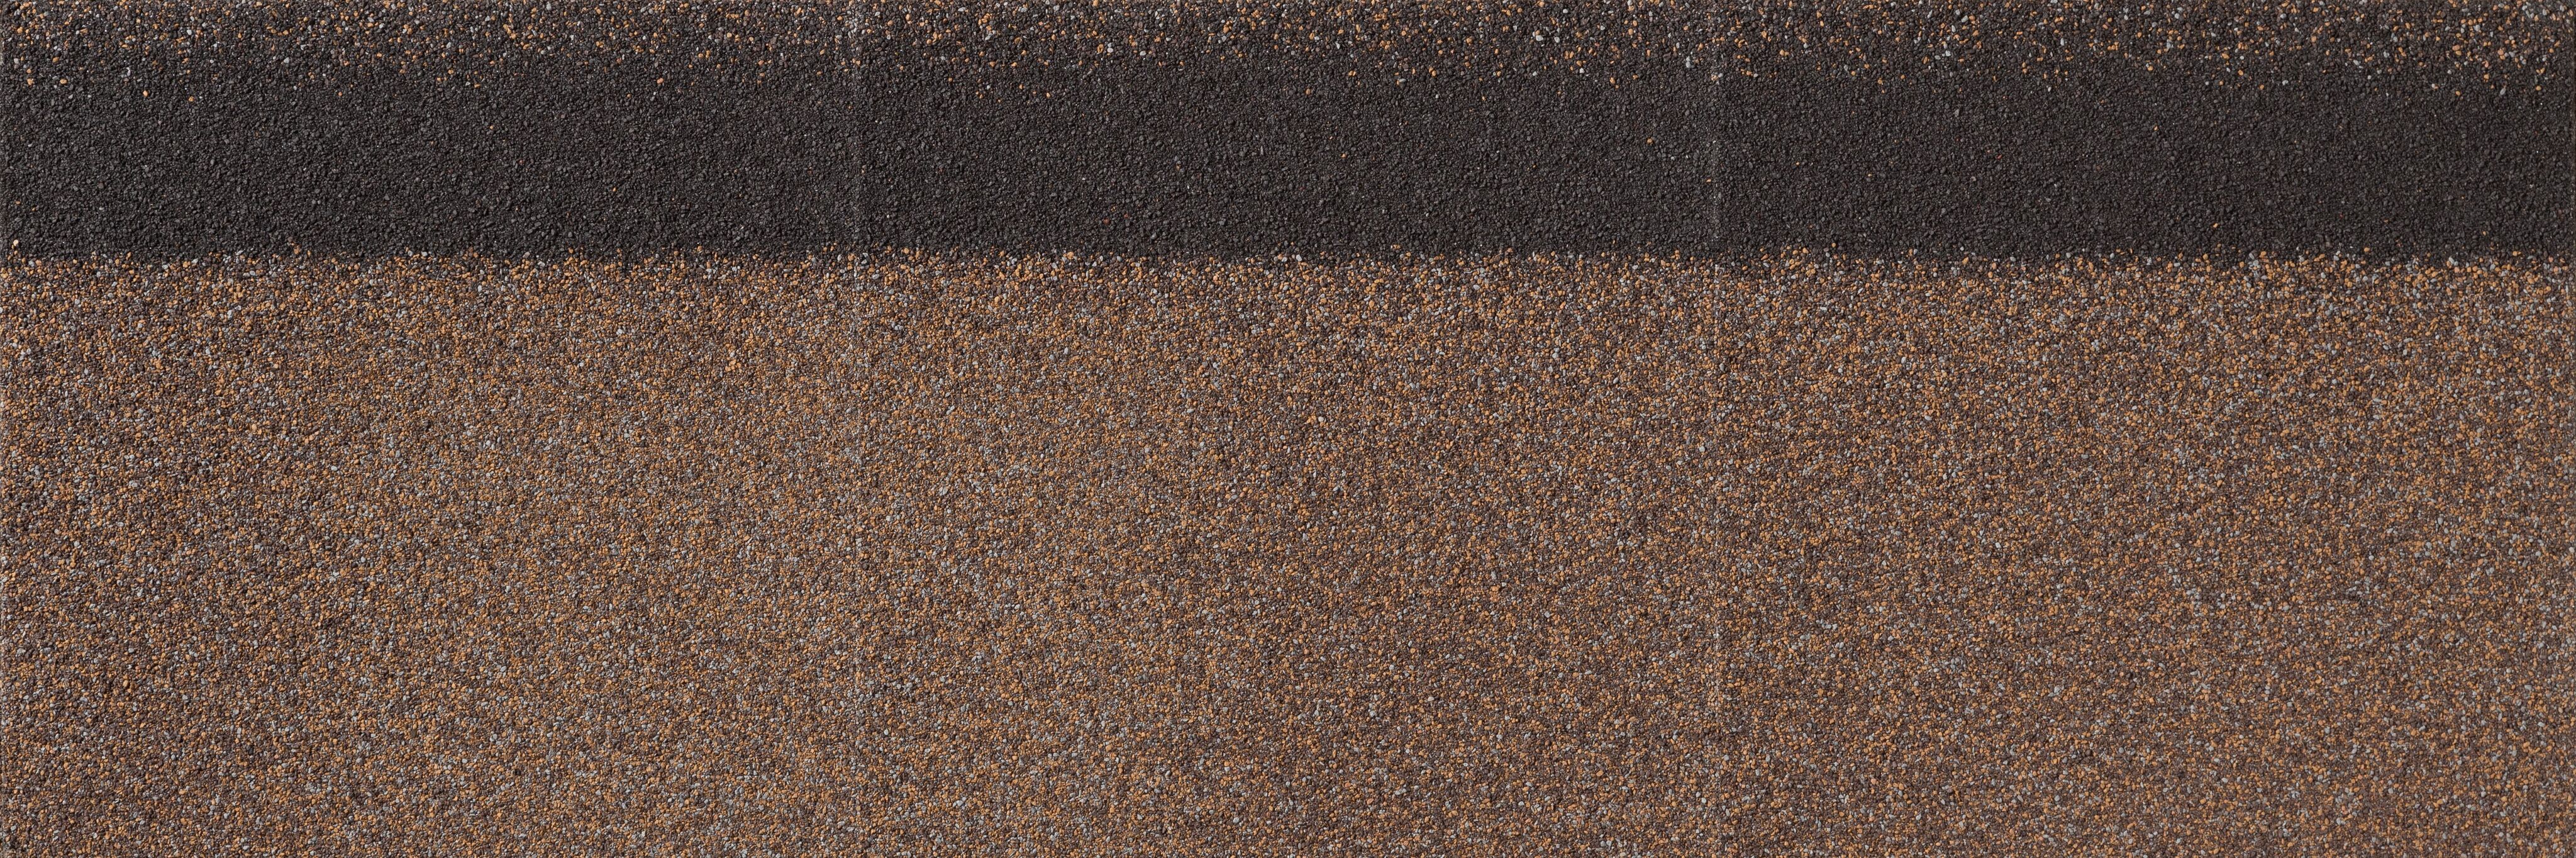 Конек-карниз Quiet tile Brick 16.8/20м.п, песок пустыни